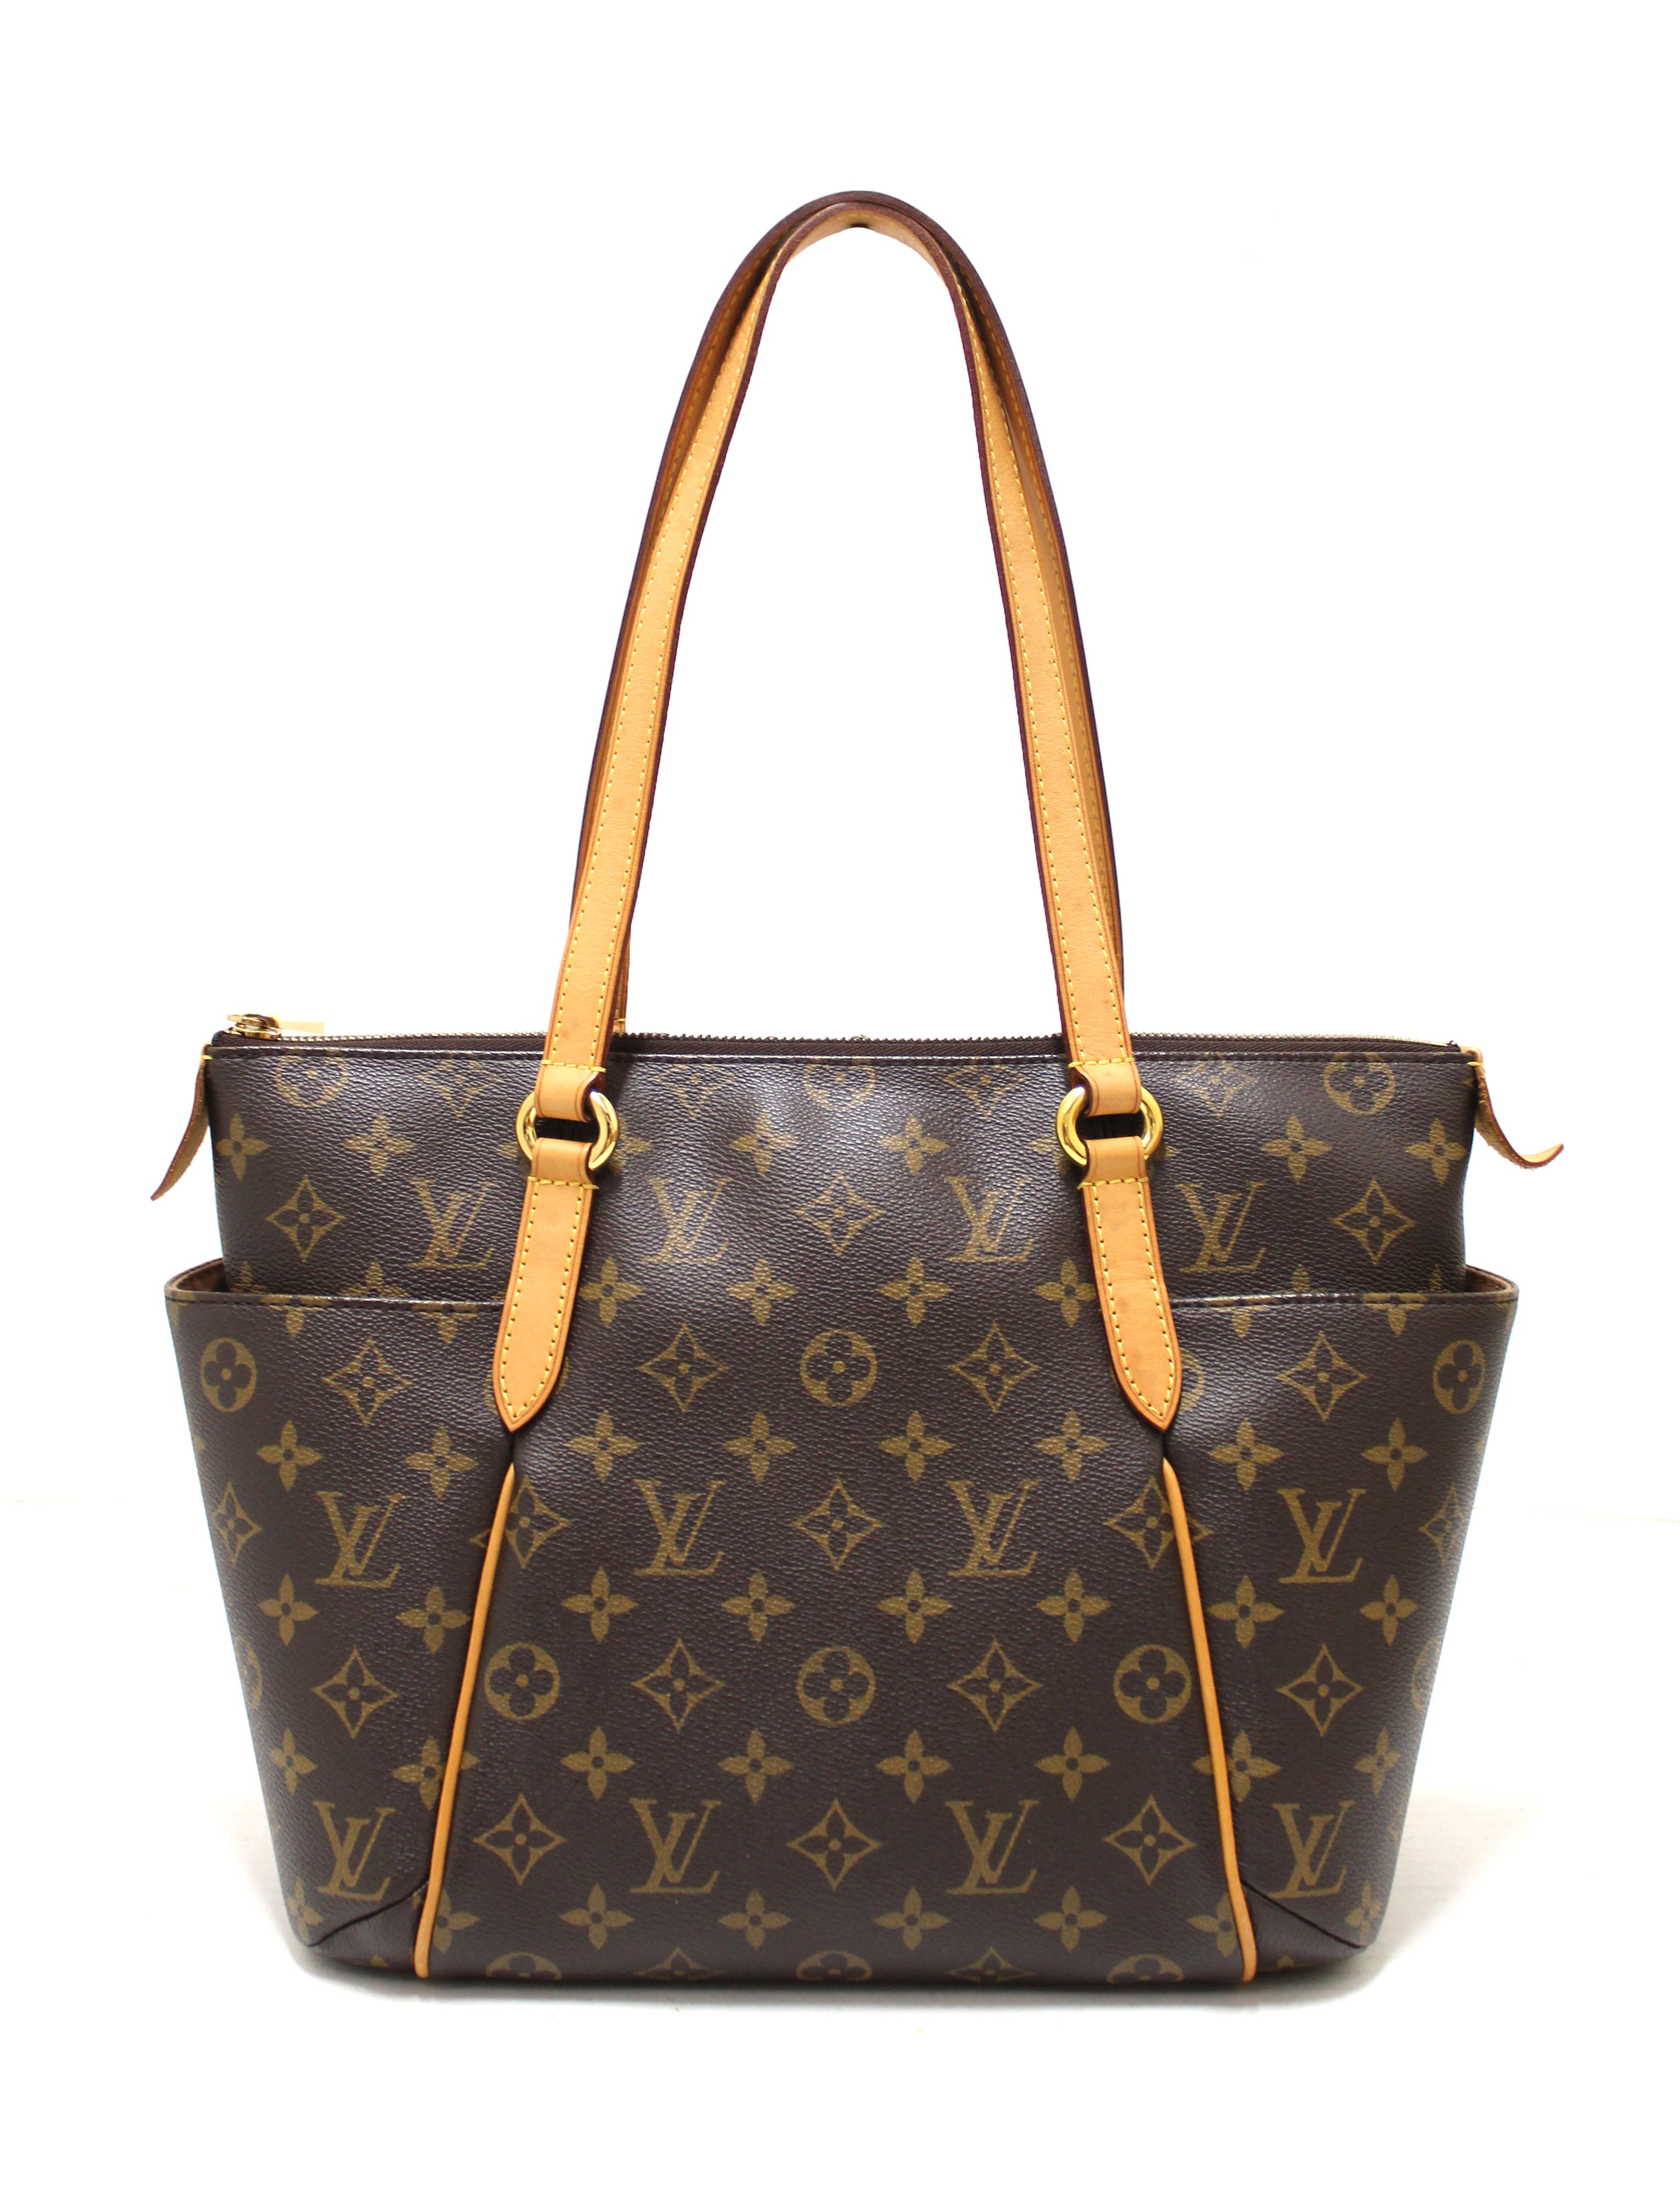 Louis Vuitton, Bags, Authentic Louis Vuitton Totally Pm Tote Bag